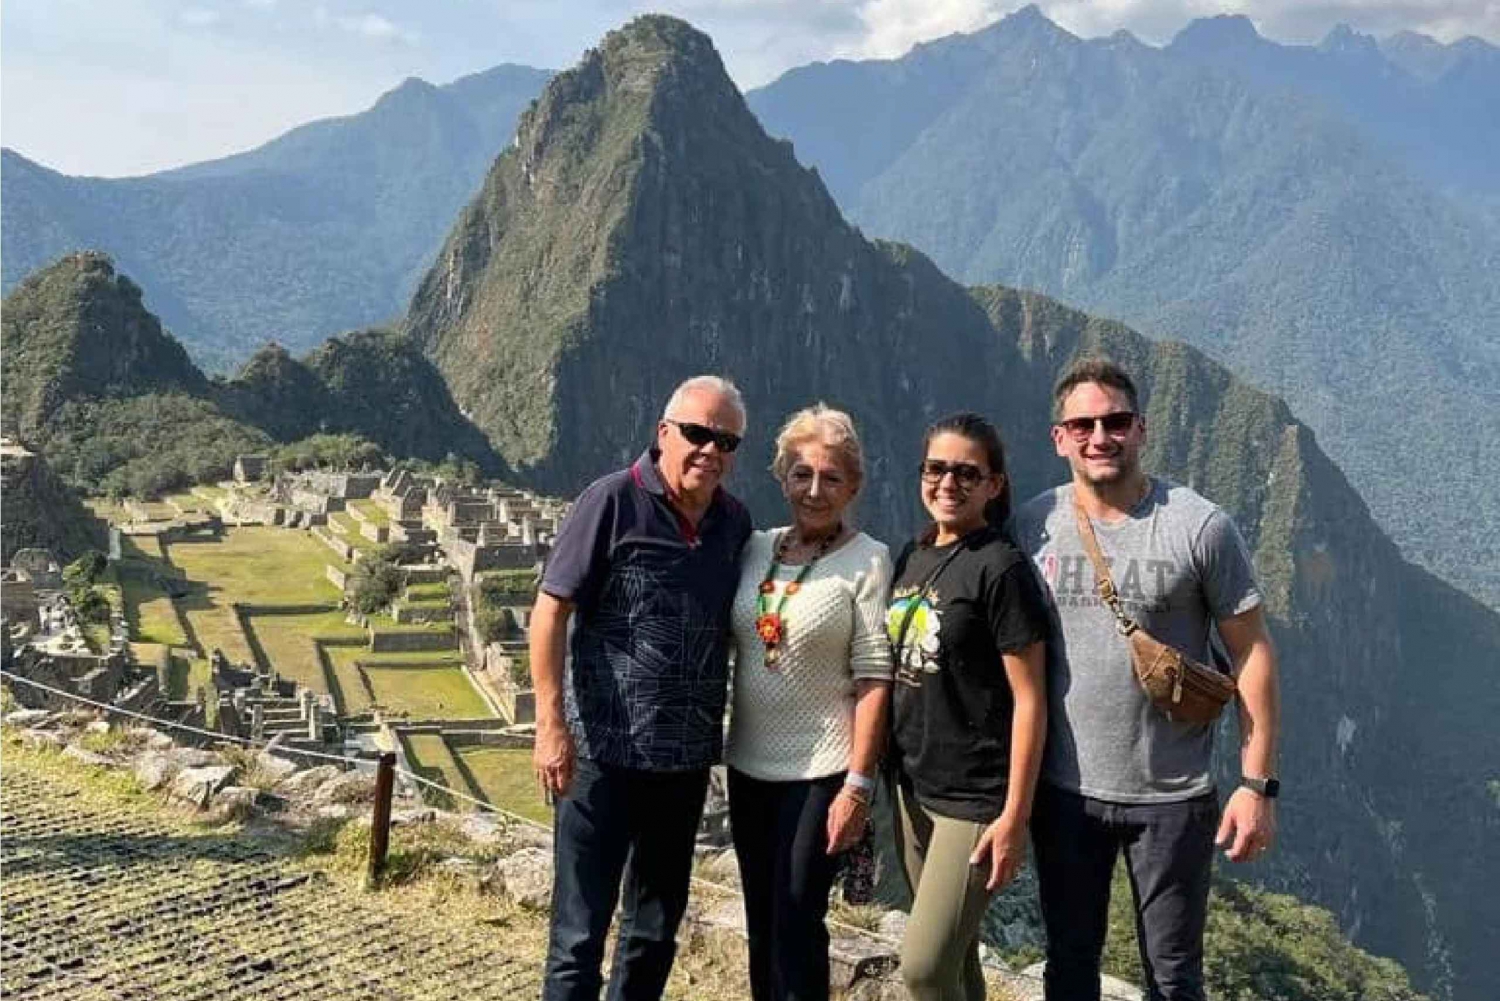 Machu Picchu Day Tour Including Entrance Ticket